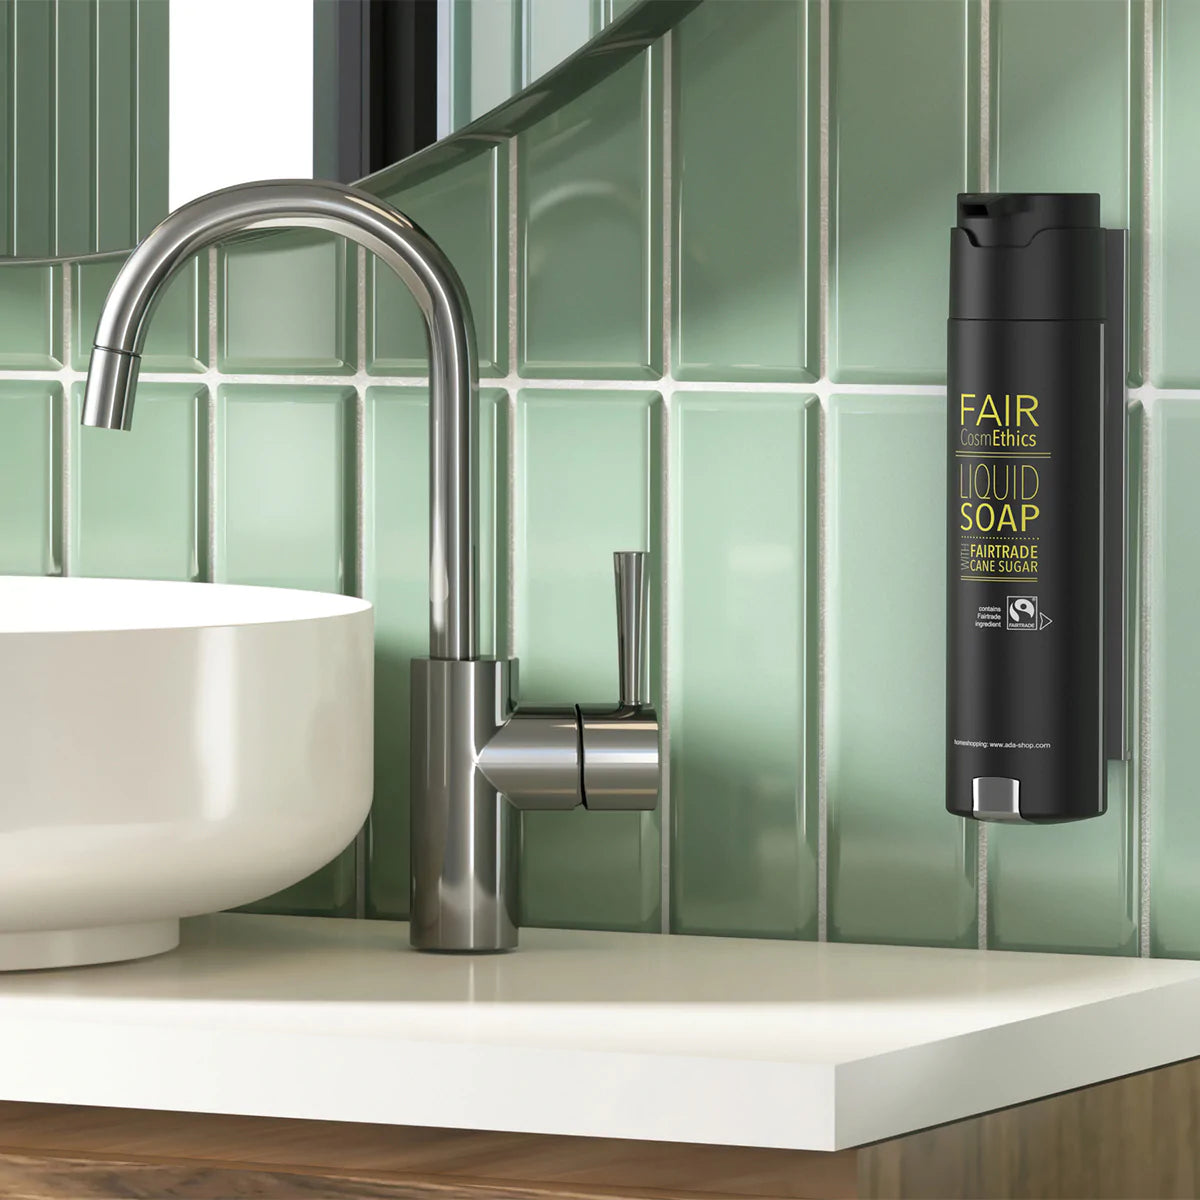 Swisstrade launches SHAPE - Australia’s most innovative and advanced hotel bathroom dispenser system yet